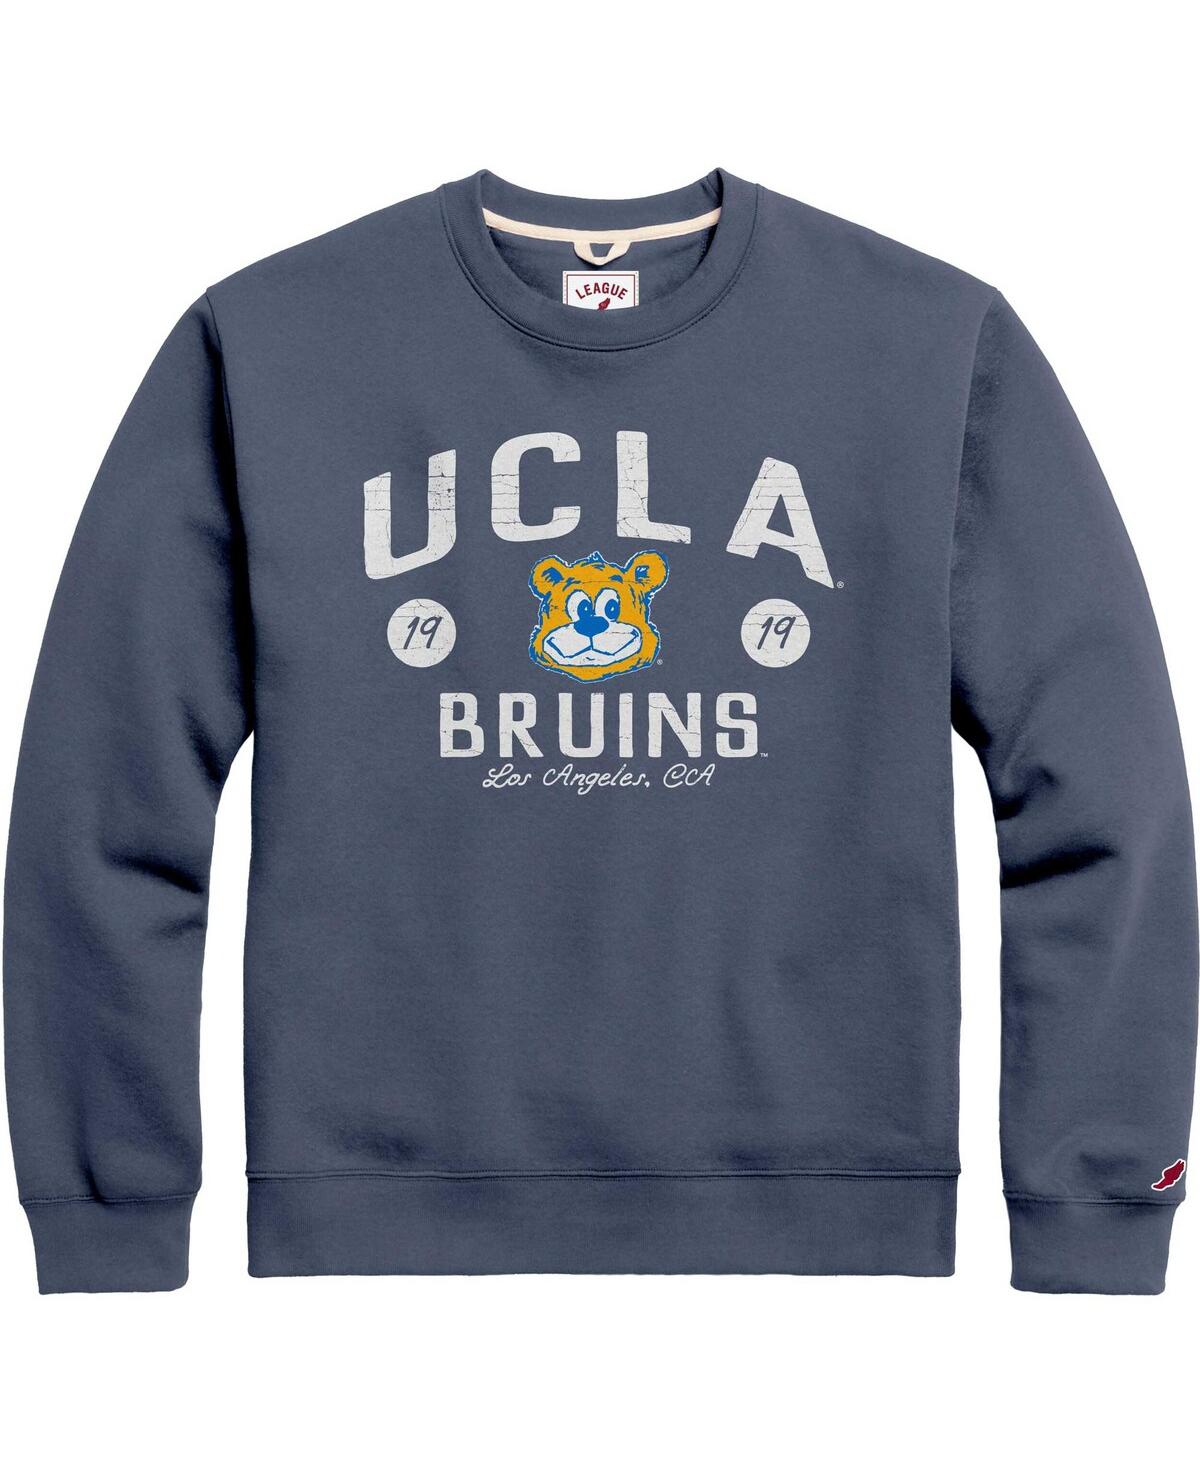 Men's League Collegiate Wear Navy Distressed Ucla Bruins Bendy Arch Essential Pullover Sweatshirt - Navy